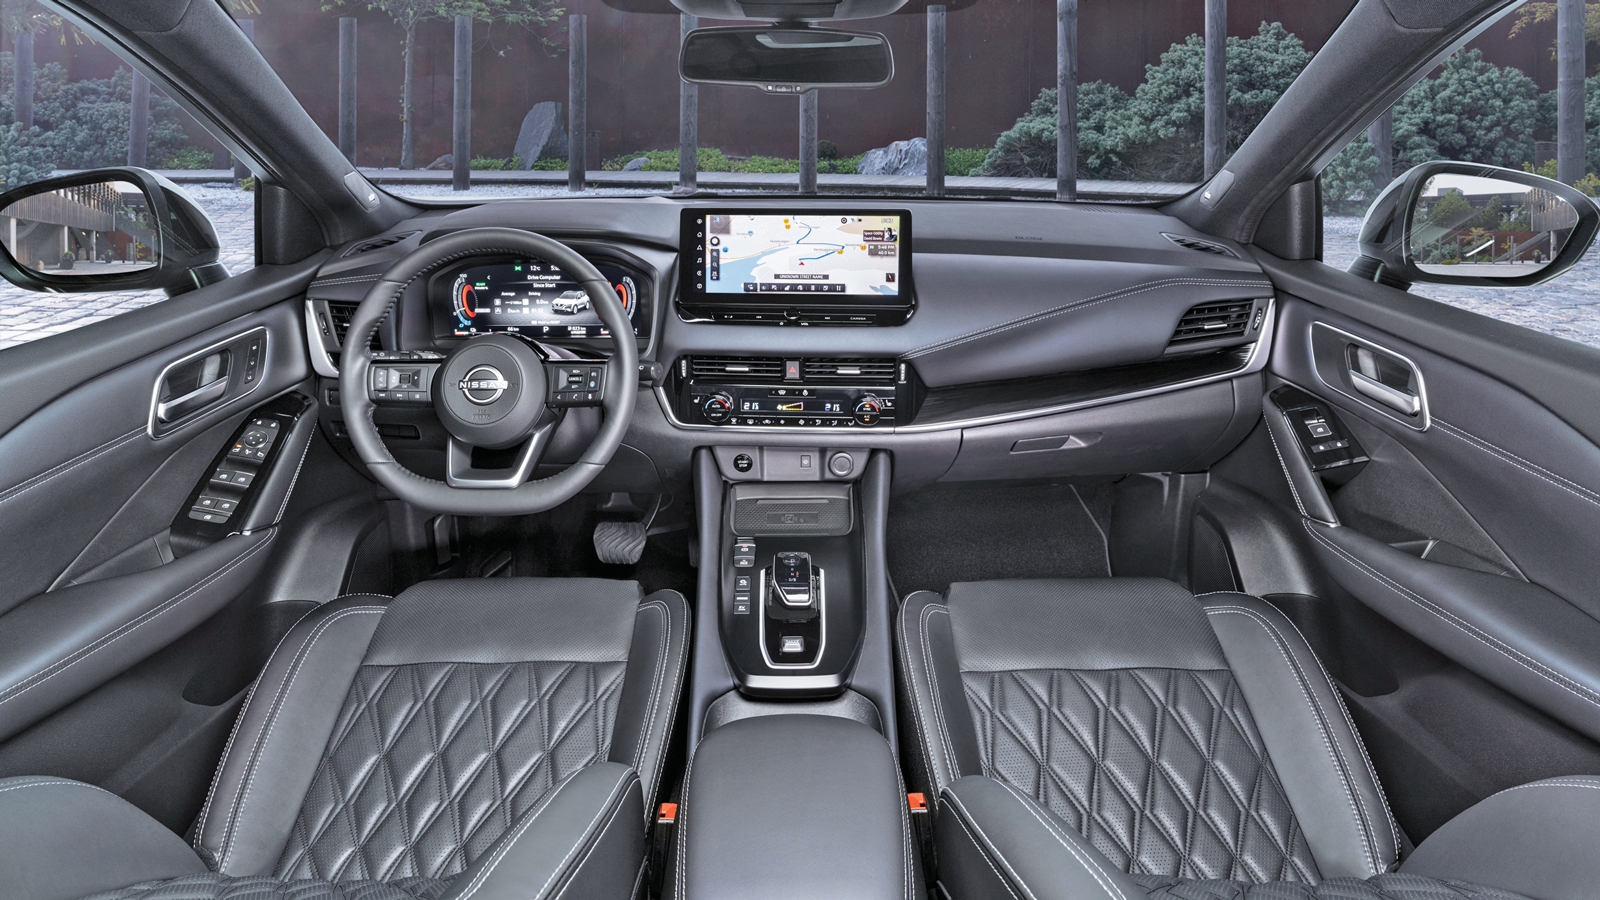 Hyundai Kona VS Nissan Qashqai Hybrid 190ps. Ποιο ξεχωρίζει σε εξοπλισμό ασφαλείας και άνεσης;